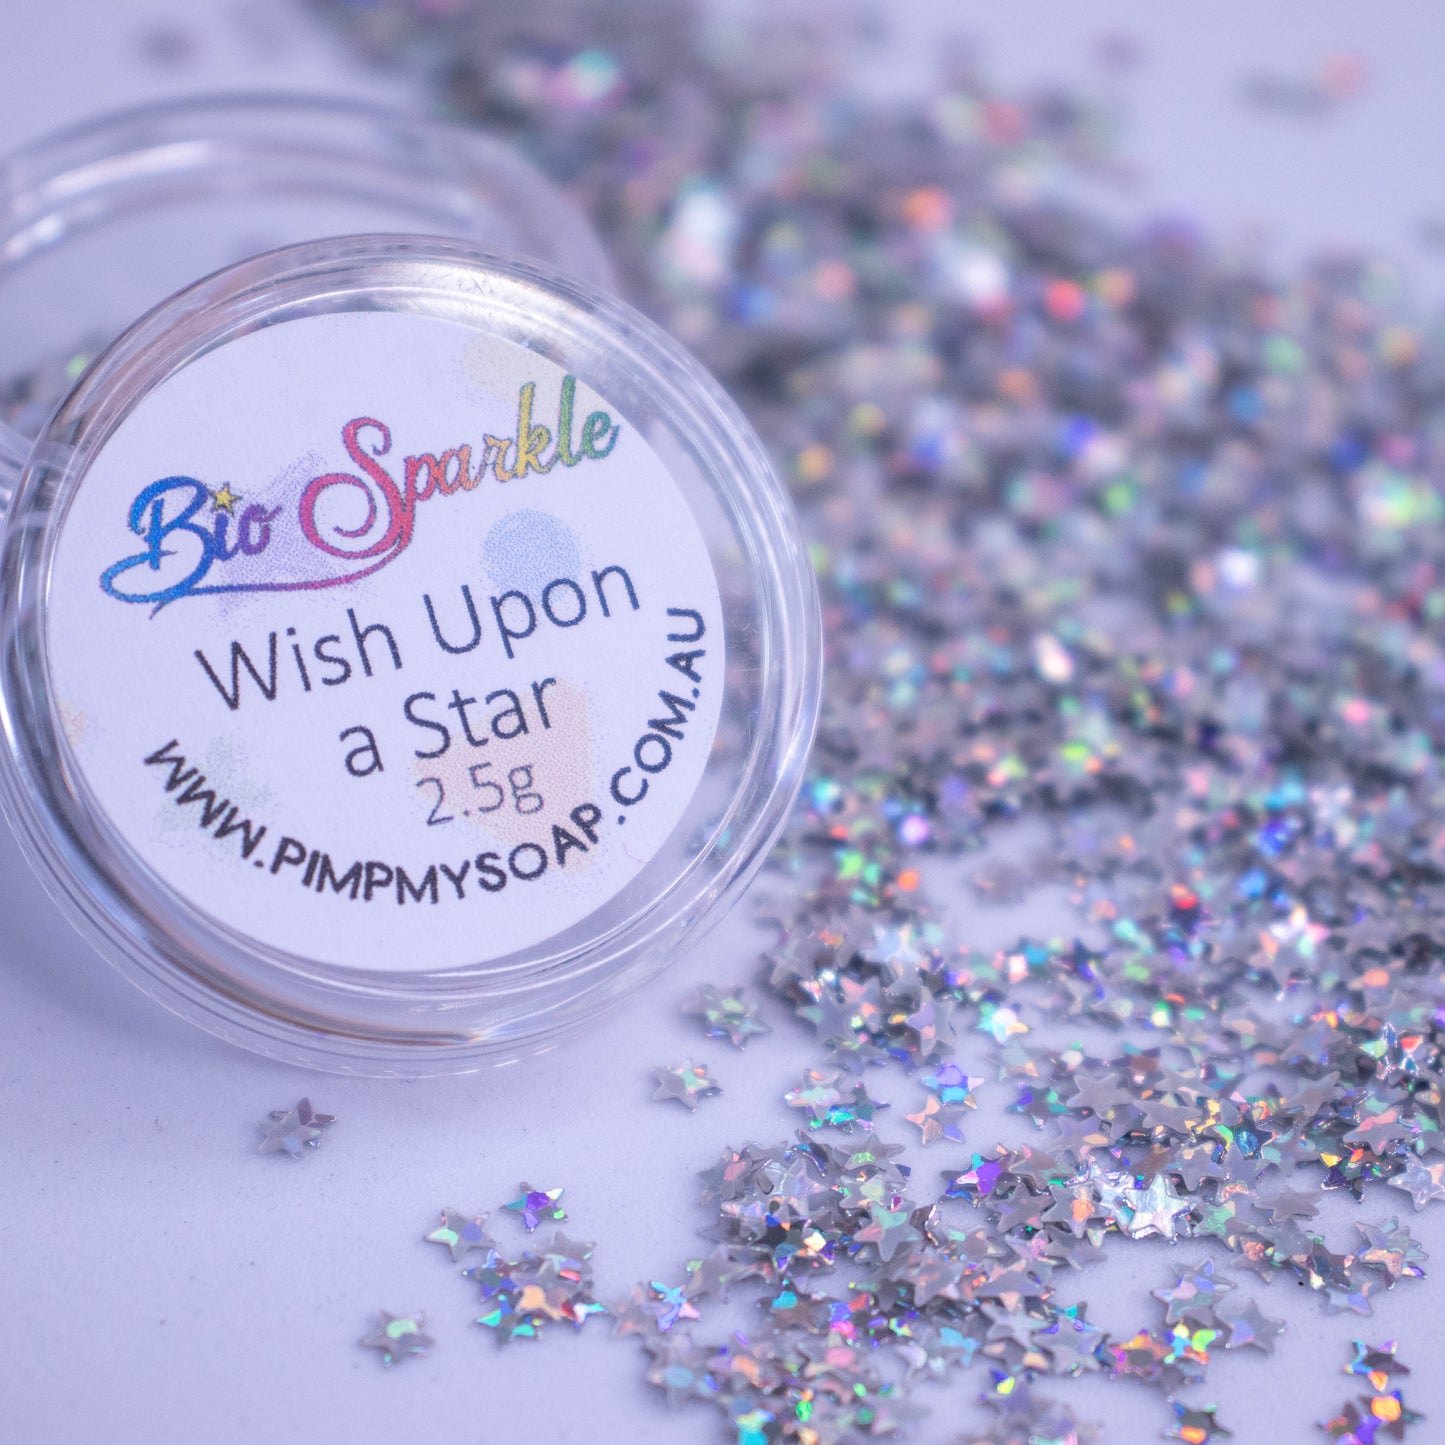 Wish upon a Star Bio Sparkle